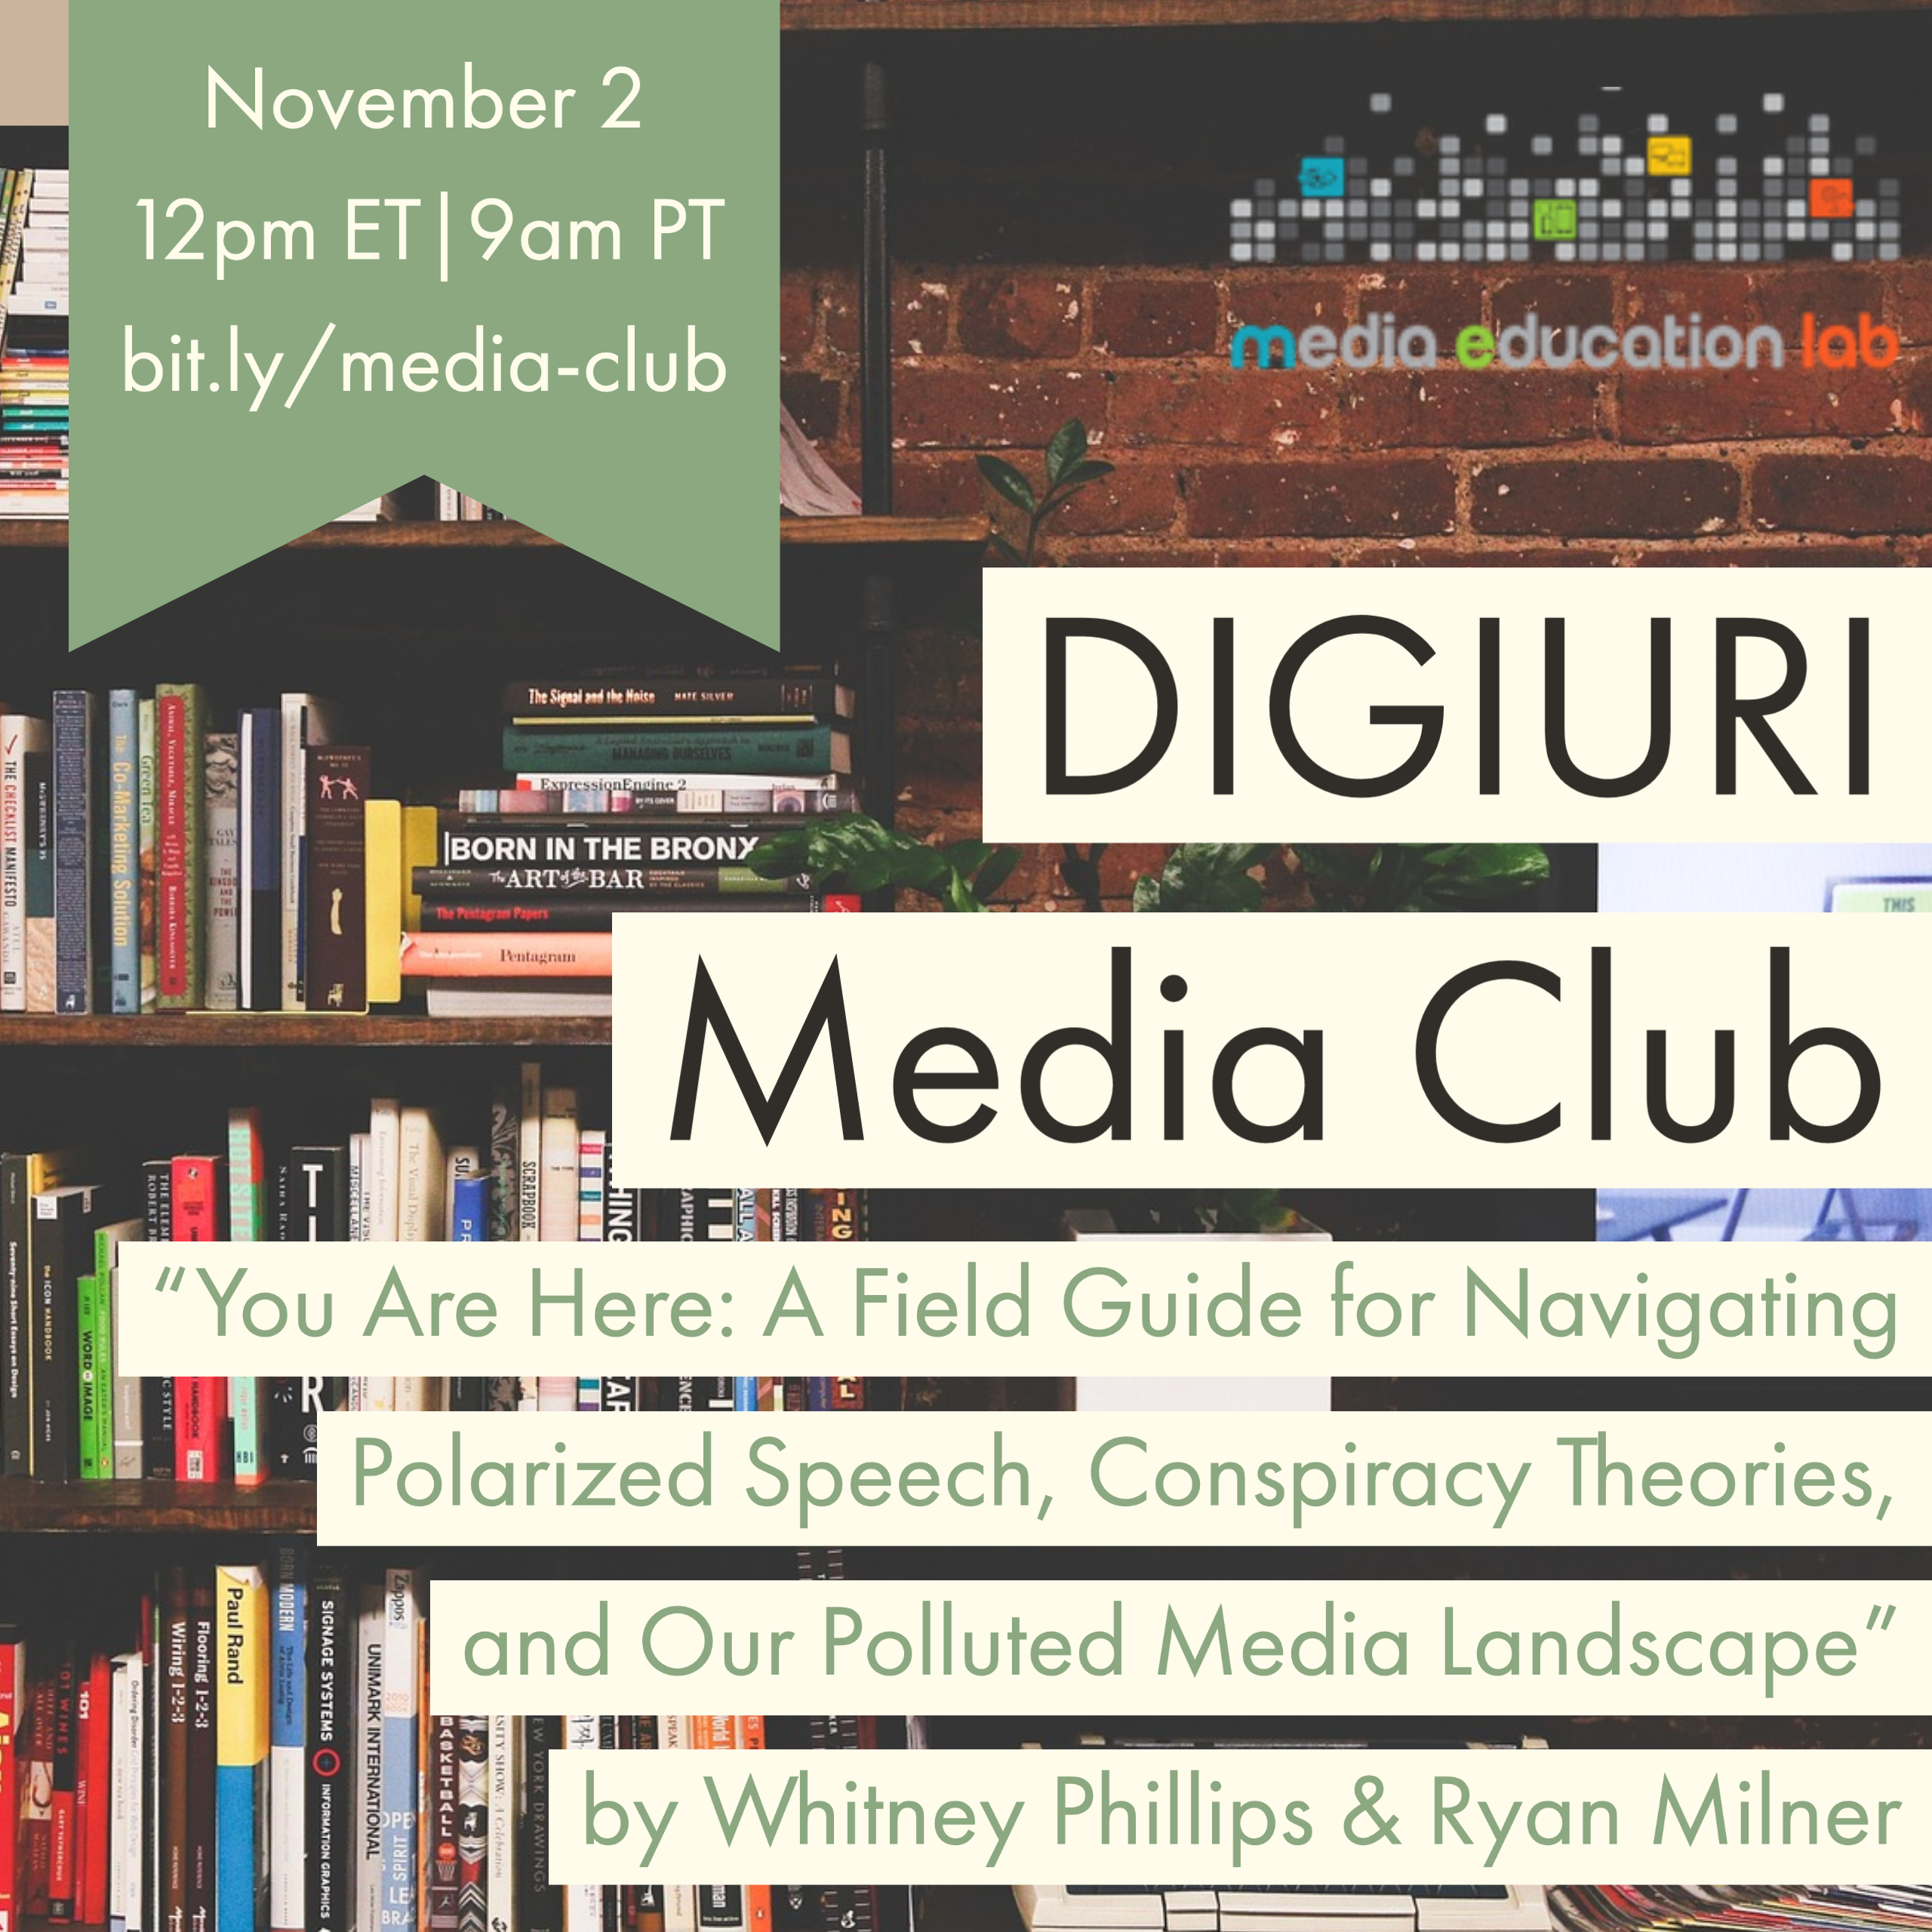 DigiURI Media Club - You Are Here